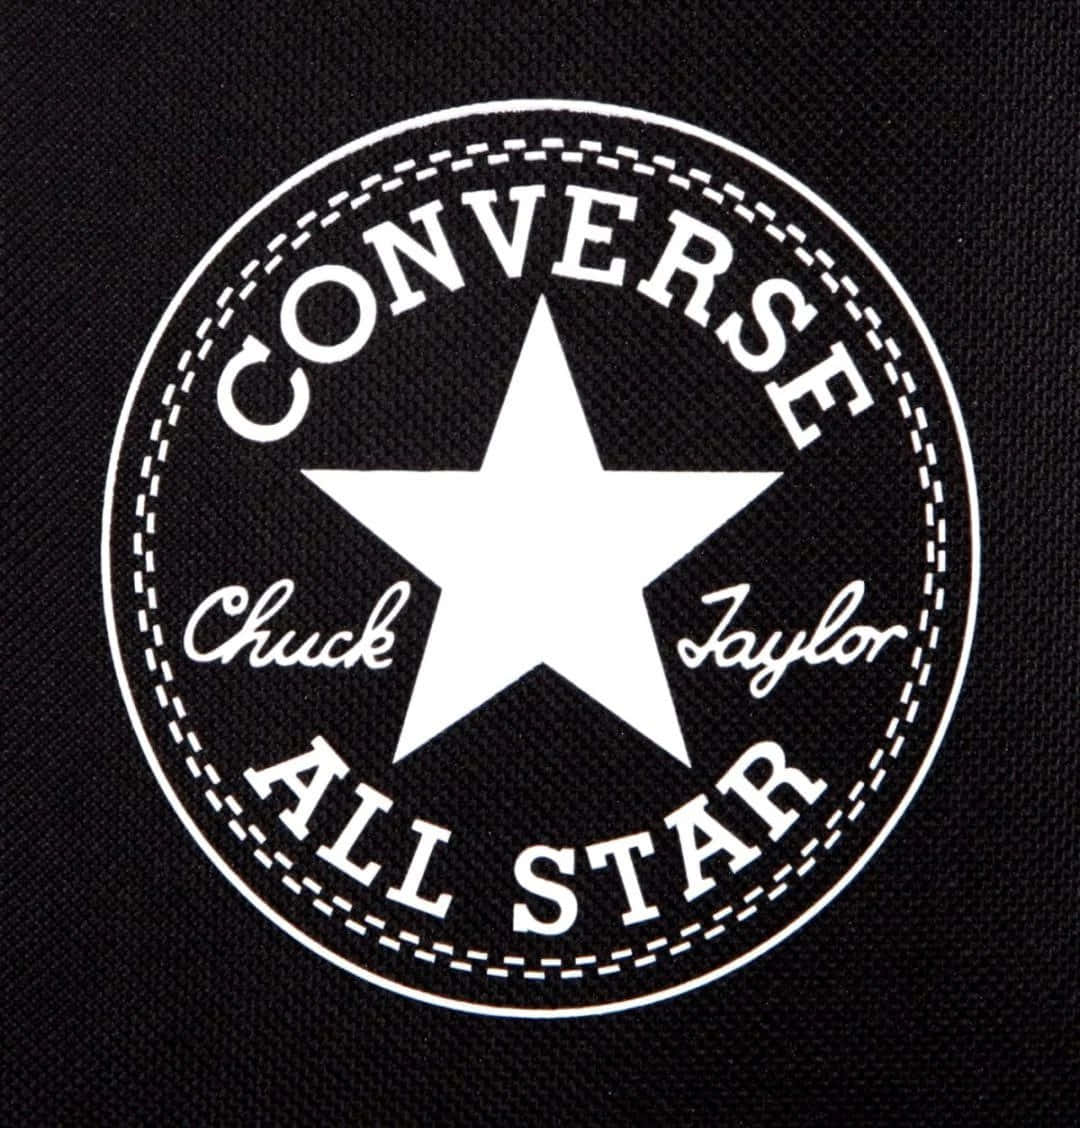 Officiellconverse-logotyp